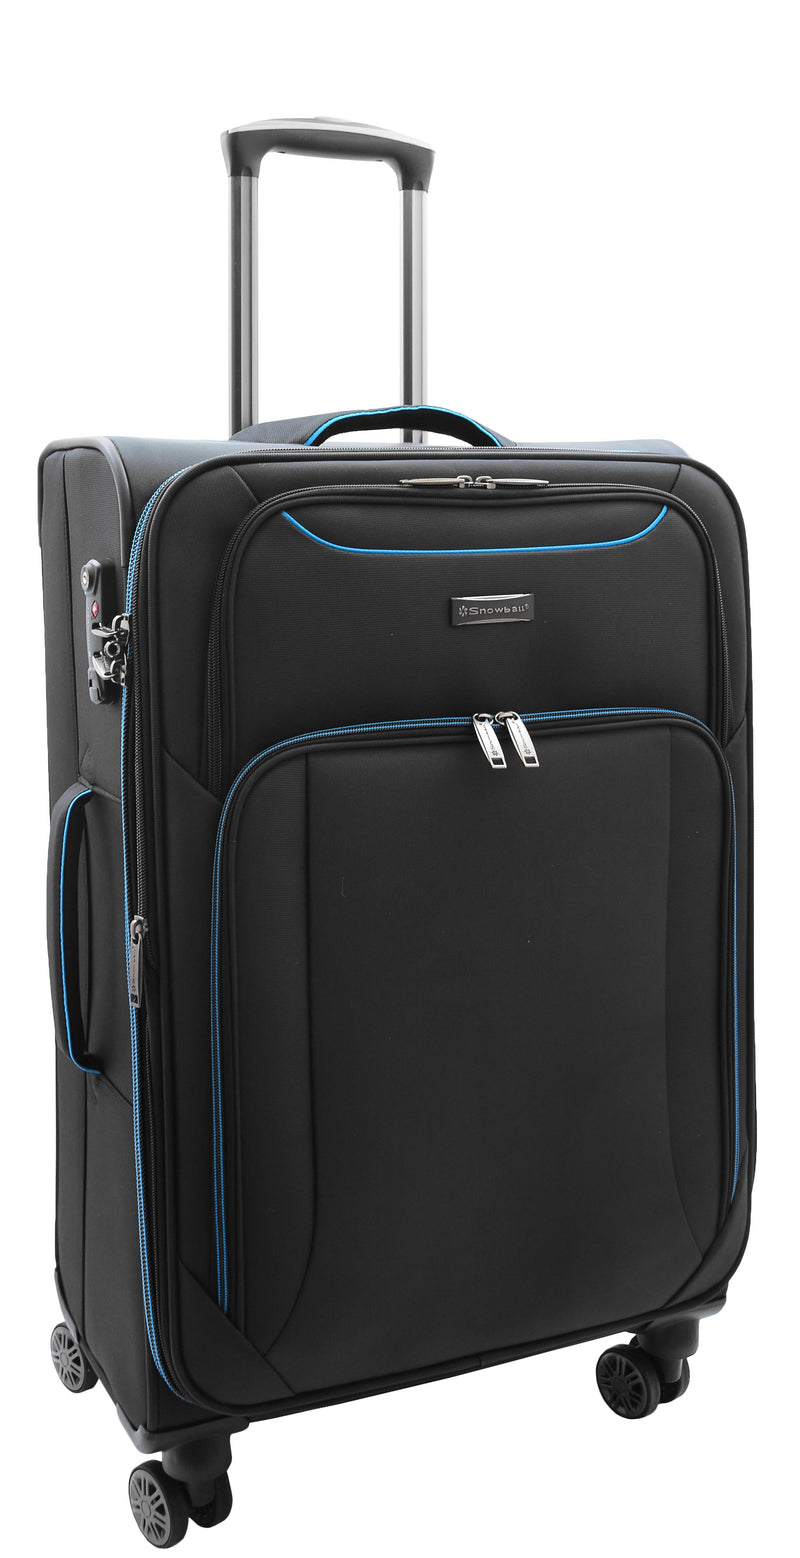 Lightweight Four Wheel Suitcase BLACK Soft Luggage TSA Lock Voyage